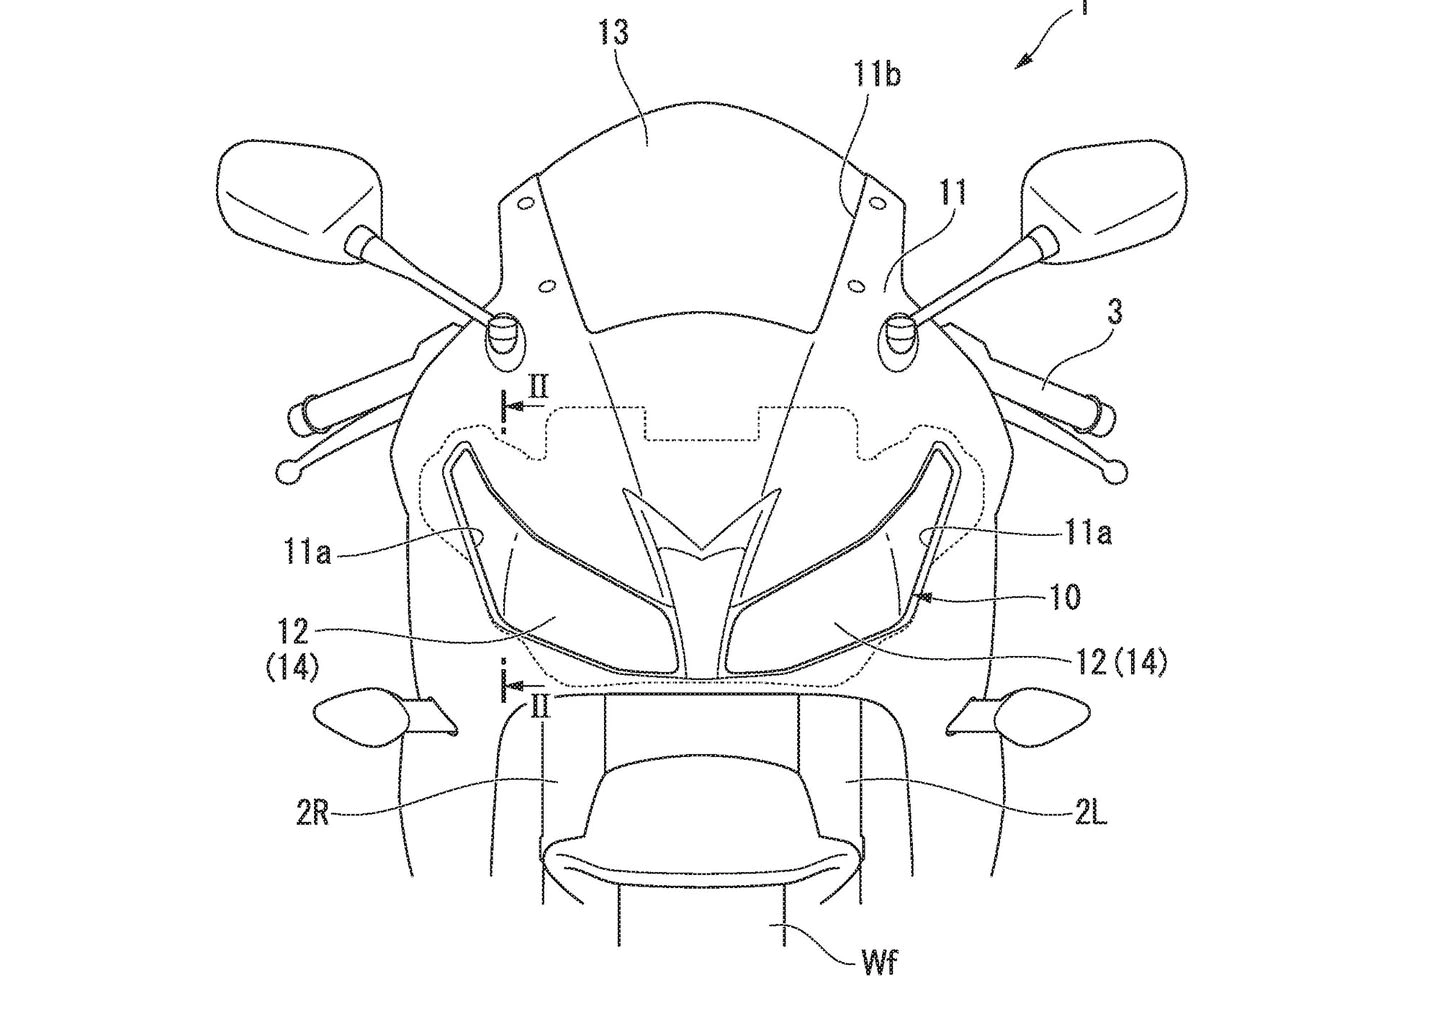 Honda-Files-Patents-For-Camera-Sensor-In-Motorcycle-Headlights-1